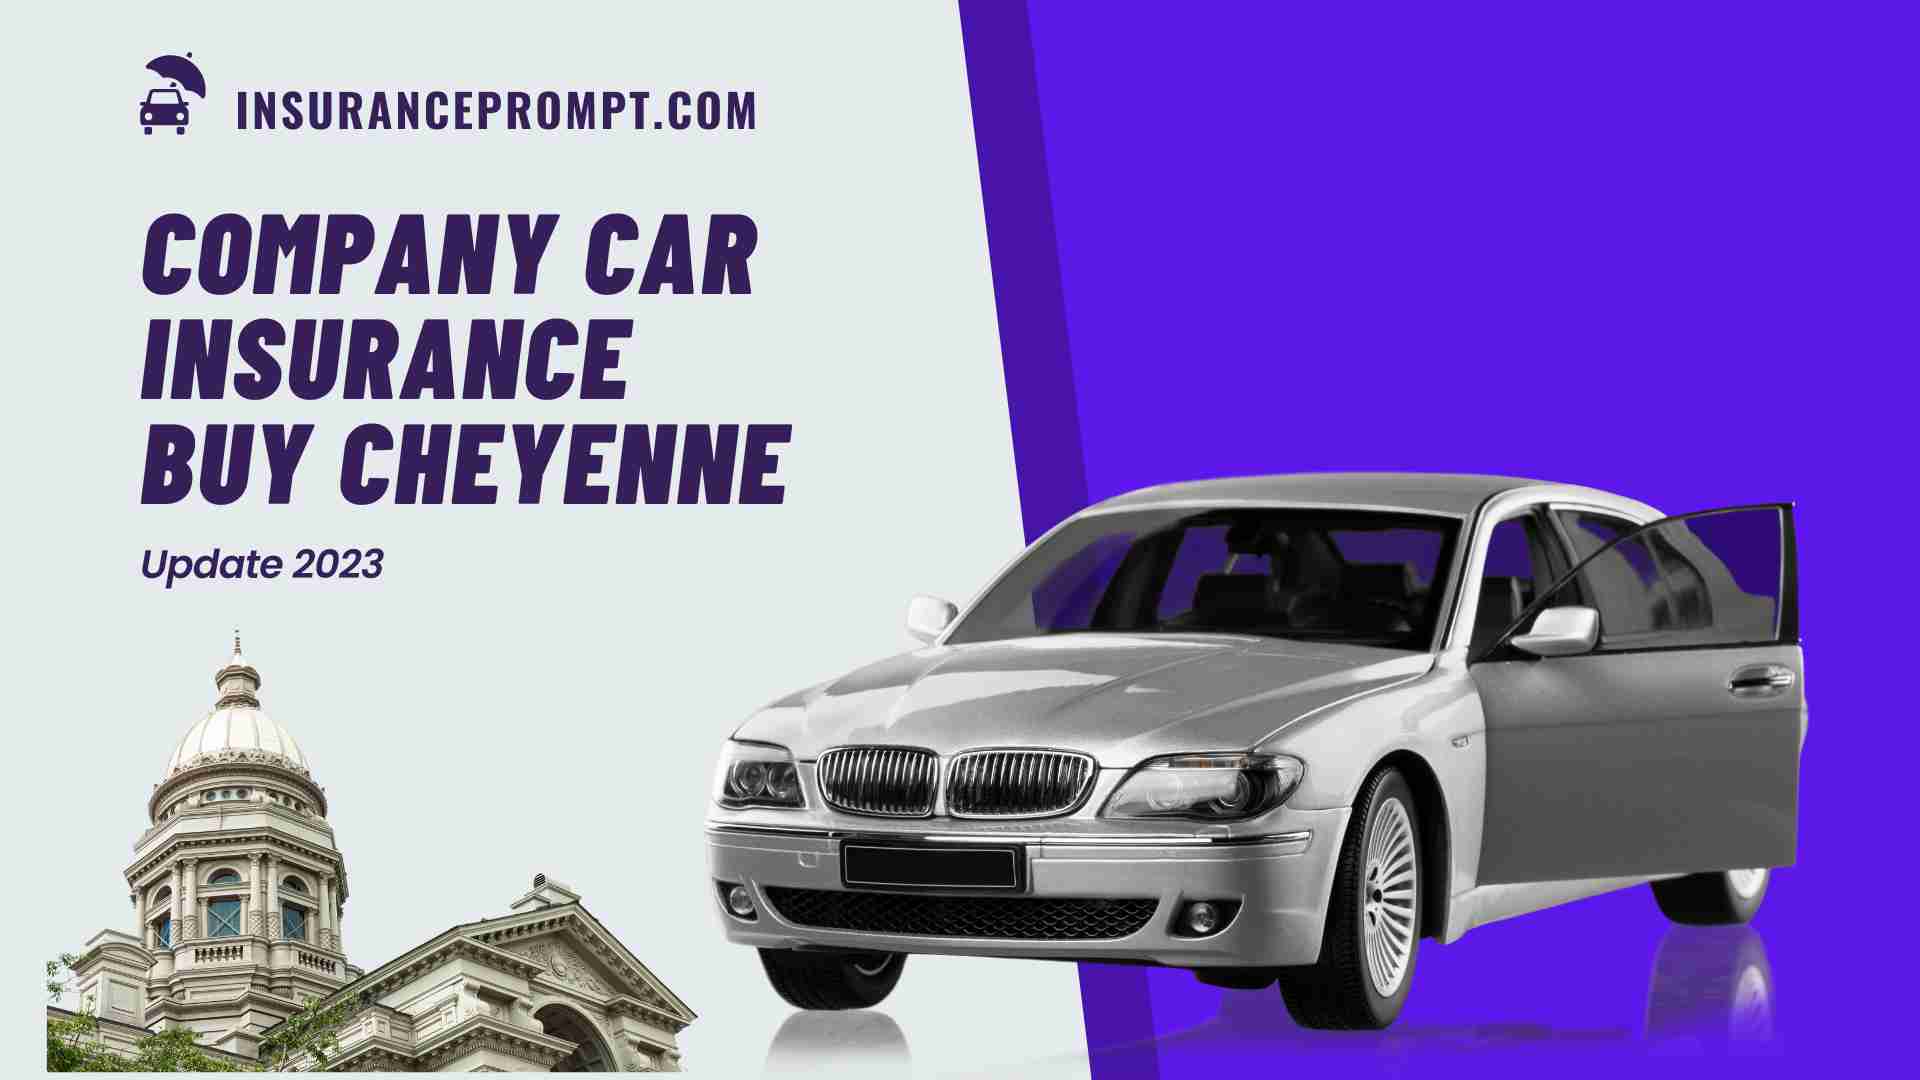 Company car insurance buy Cheyenne-(2023 Update)